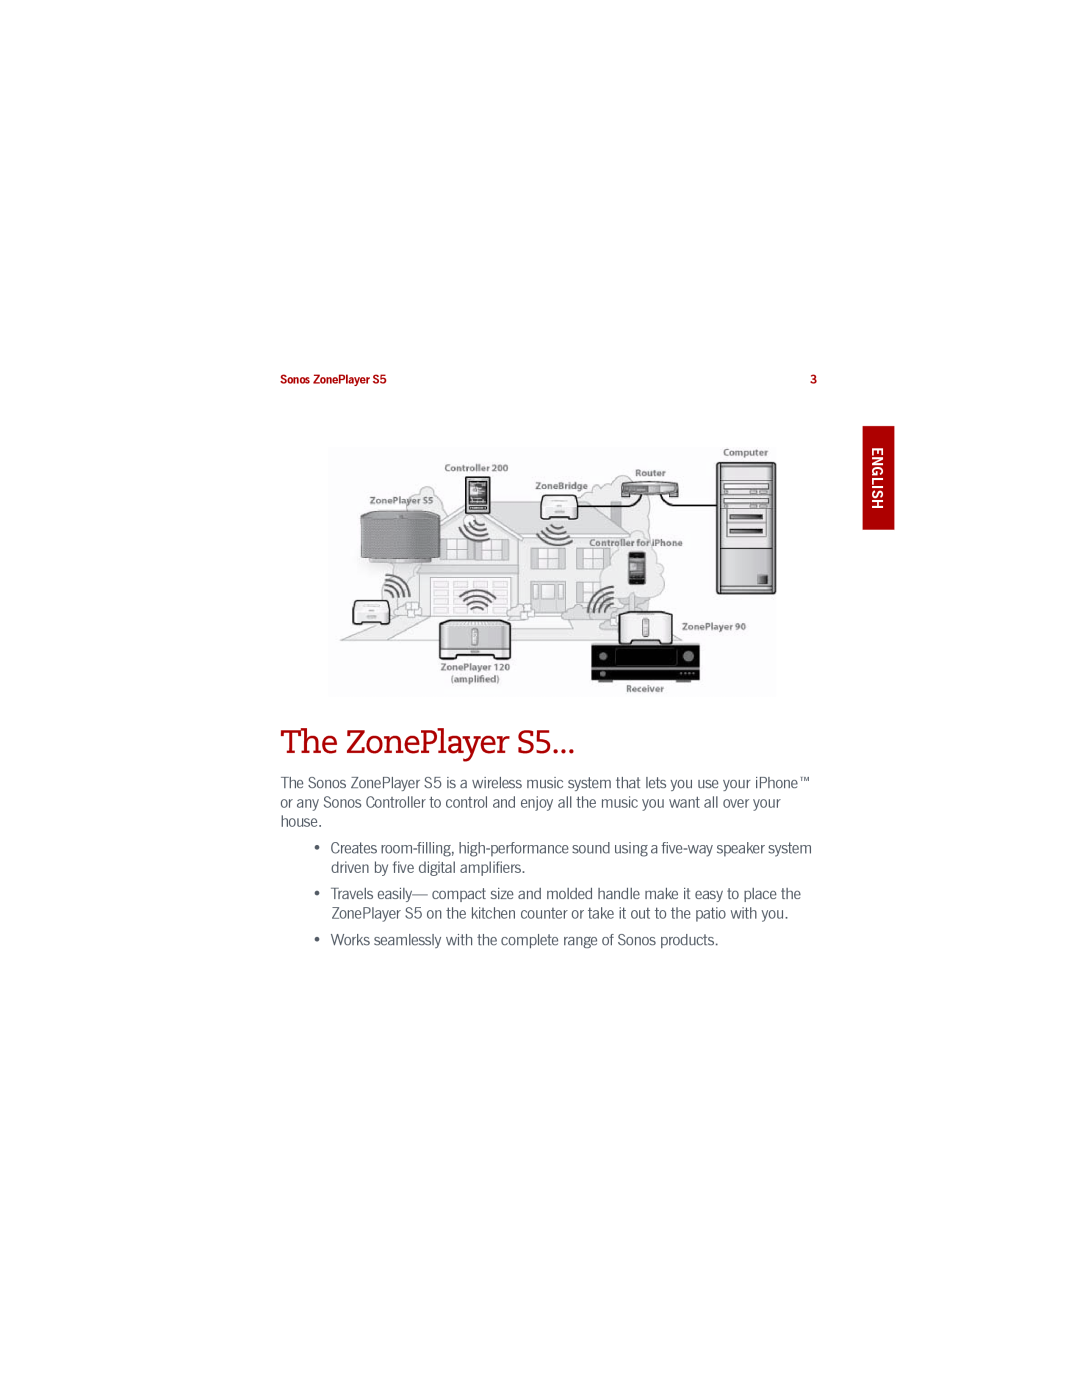 Sonos manual The ZonePlayer S5, Sonos ZonePlayer S5 